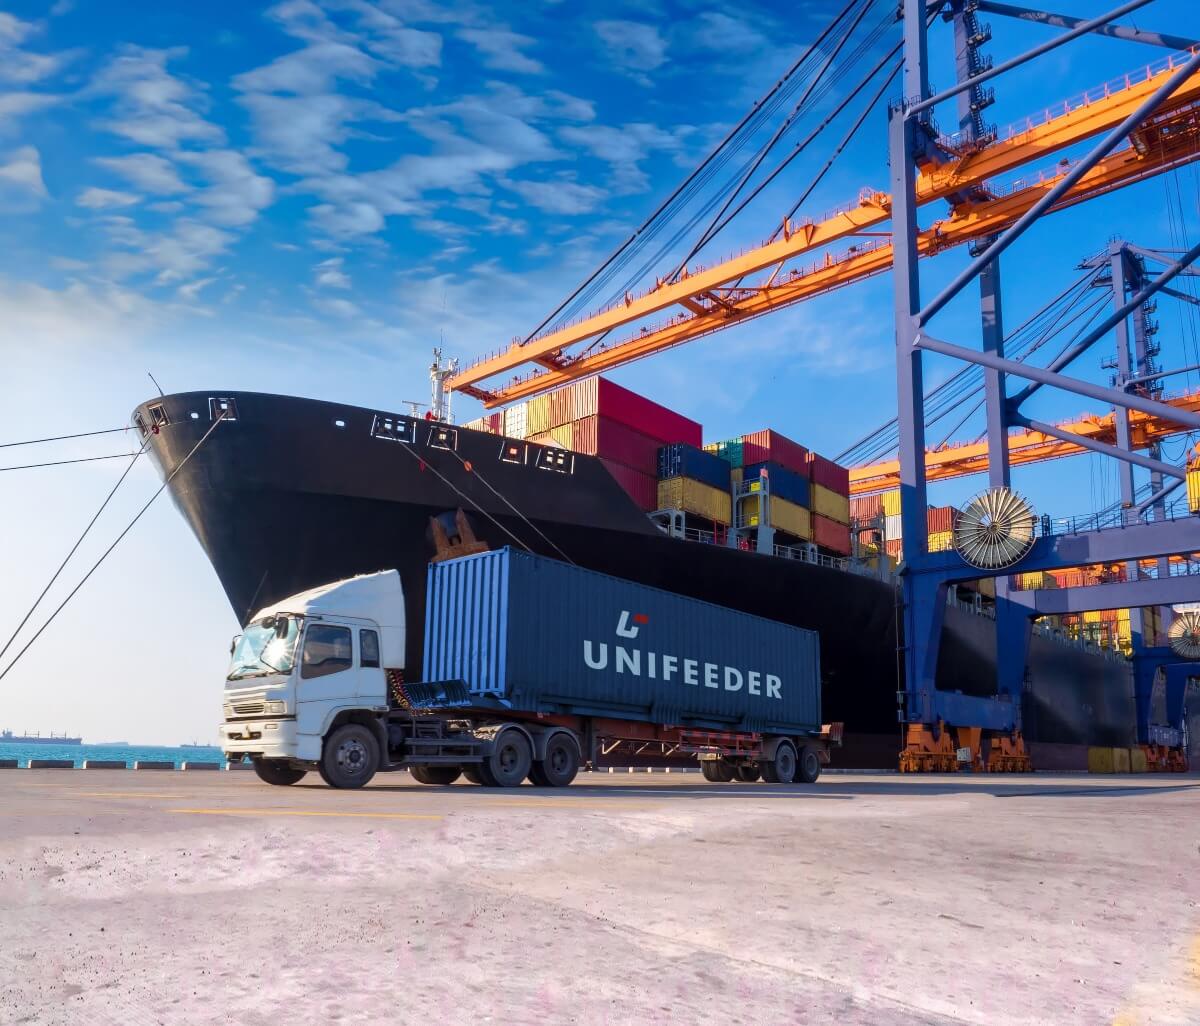 Unifeeder - truck and vessel